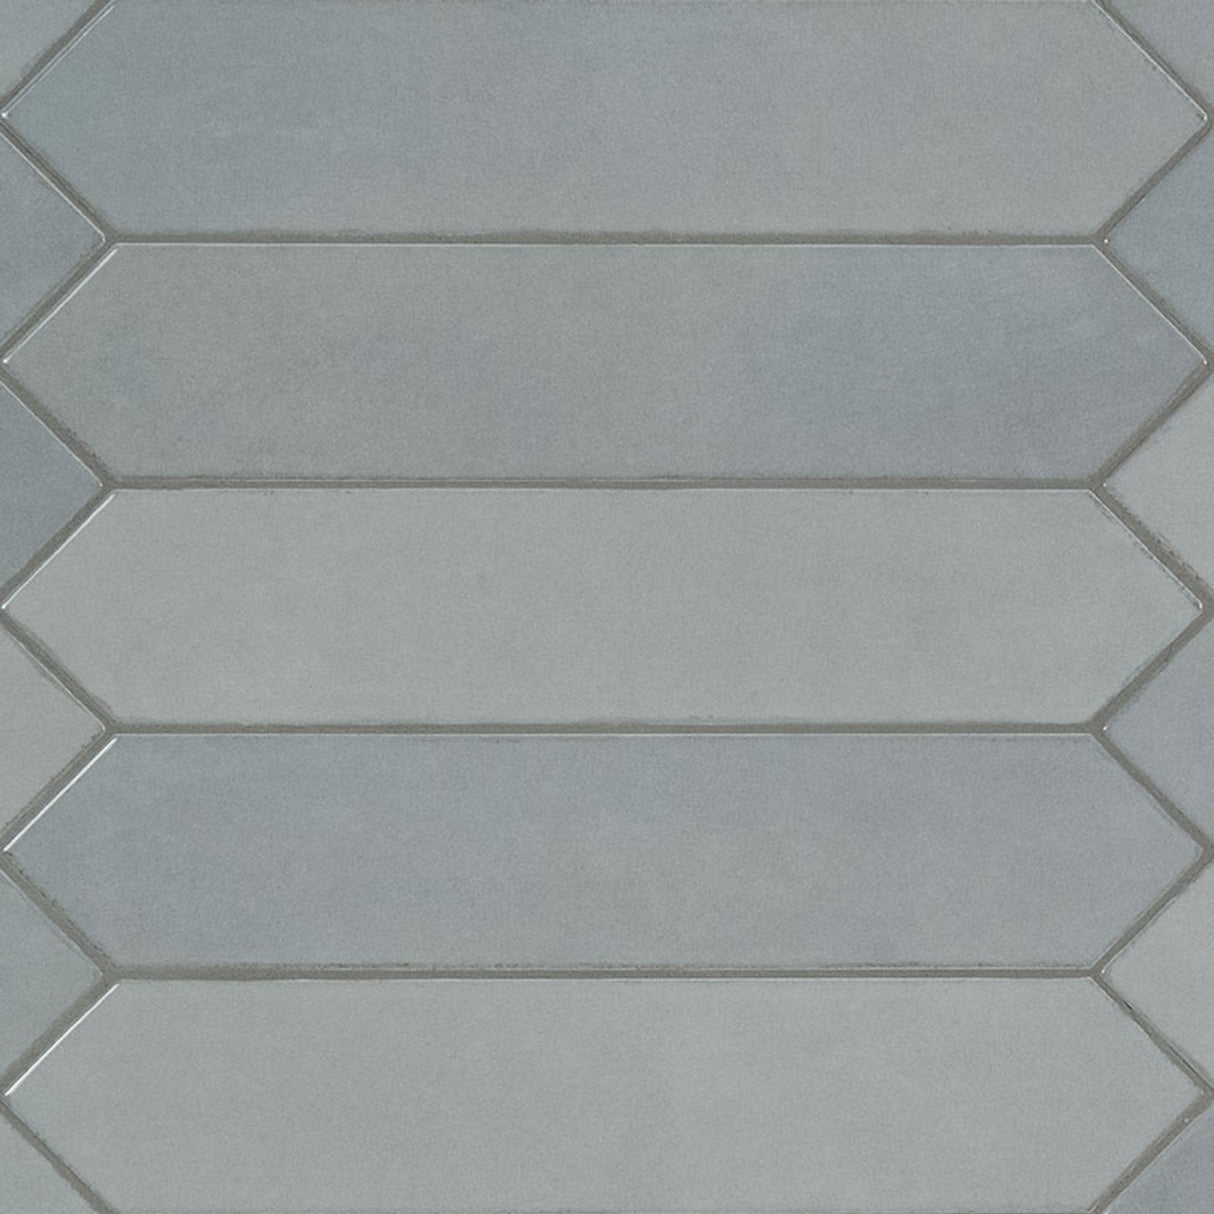 Renzo sky pickett 2.5x13 glossy ceramic blue wall tile NRENSKYPIC2.5X13 product shot multiple tiles angle view